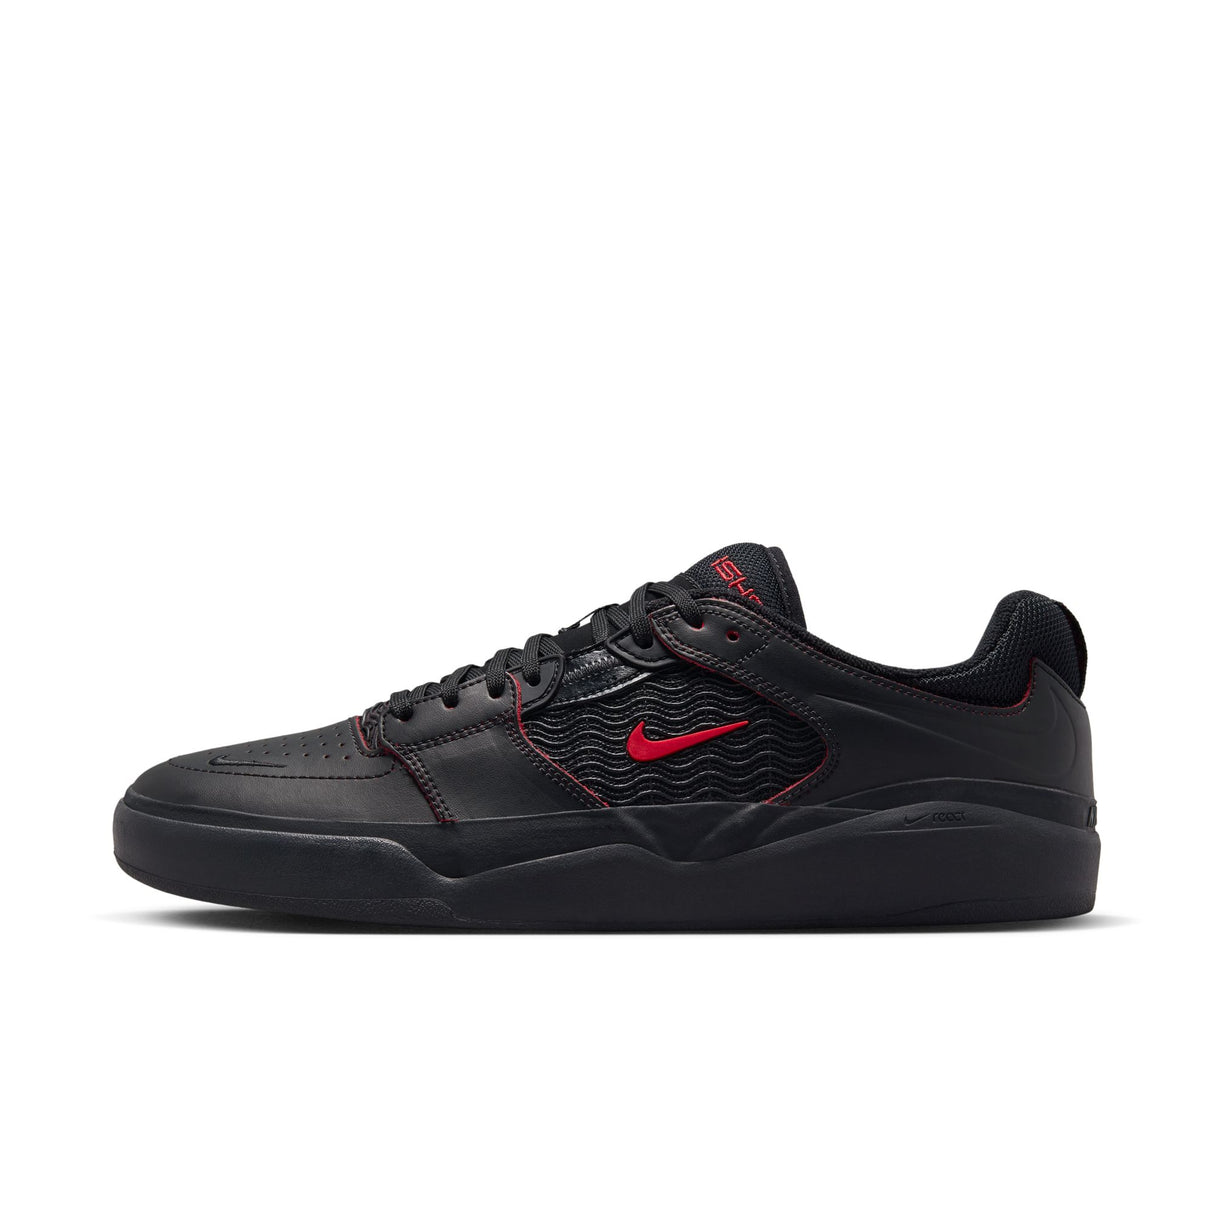 Nike SB Ishod Premium Black University Red Black Leather Shoes